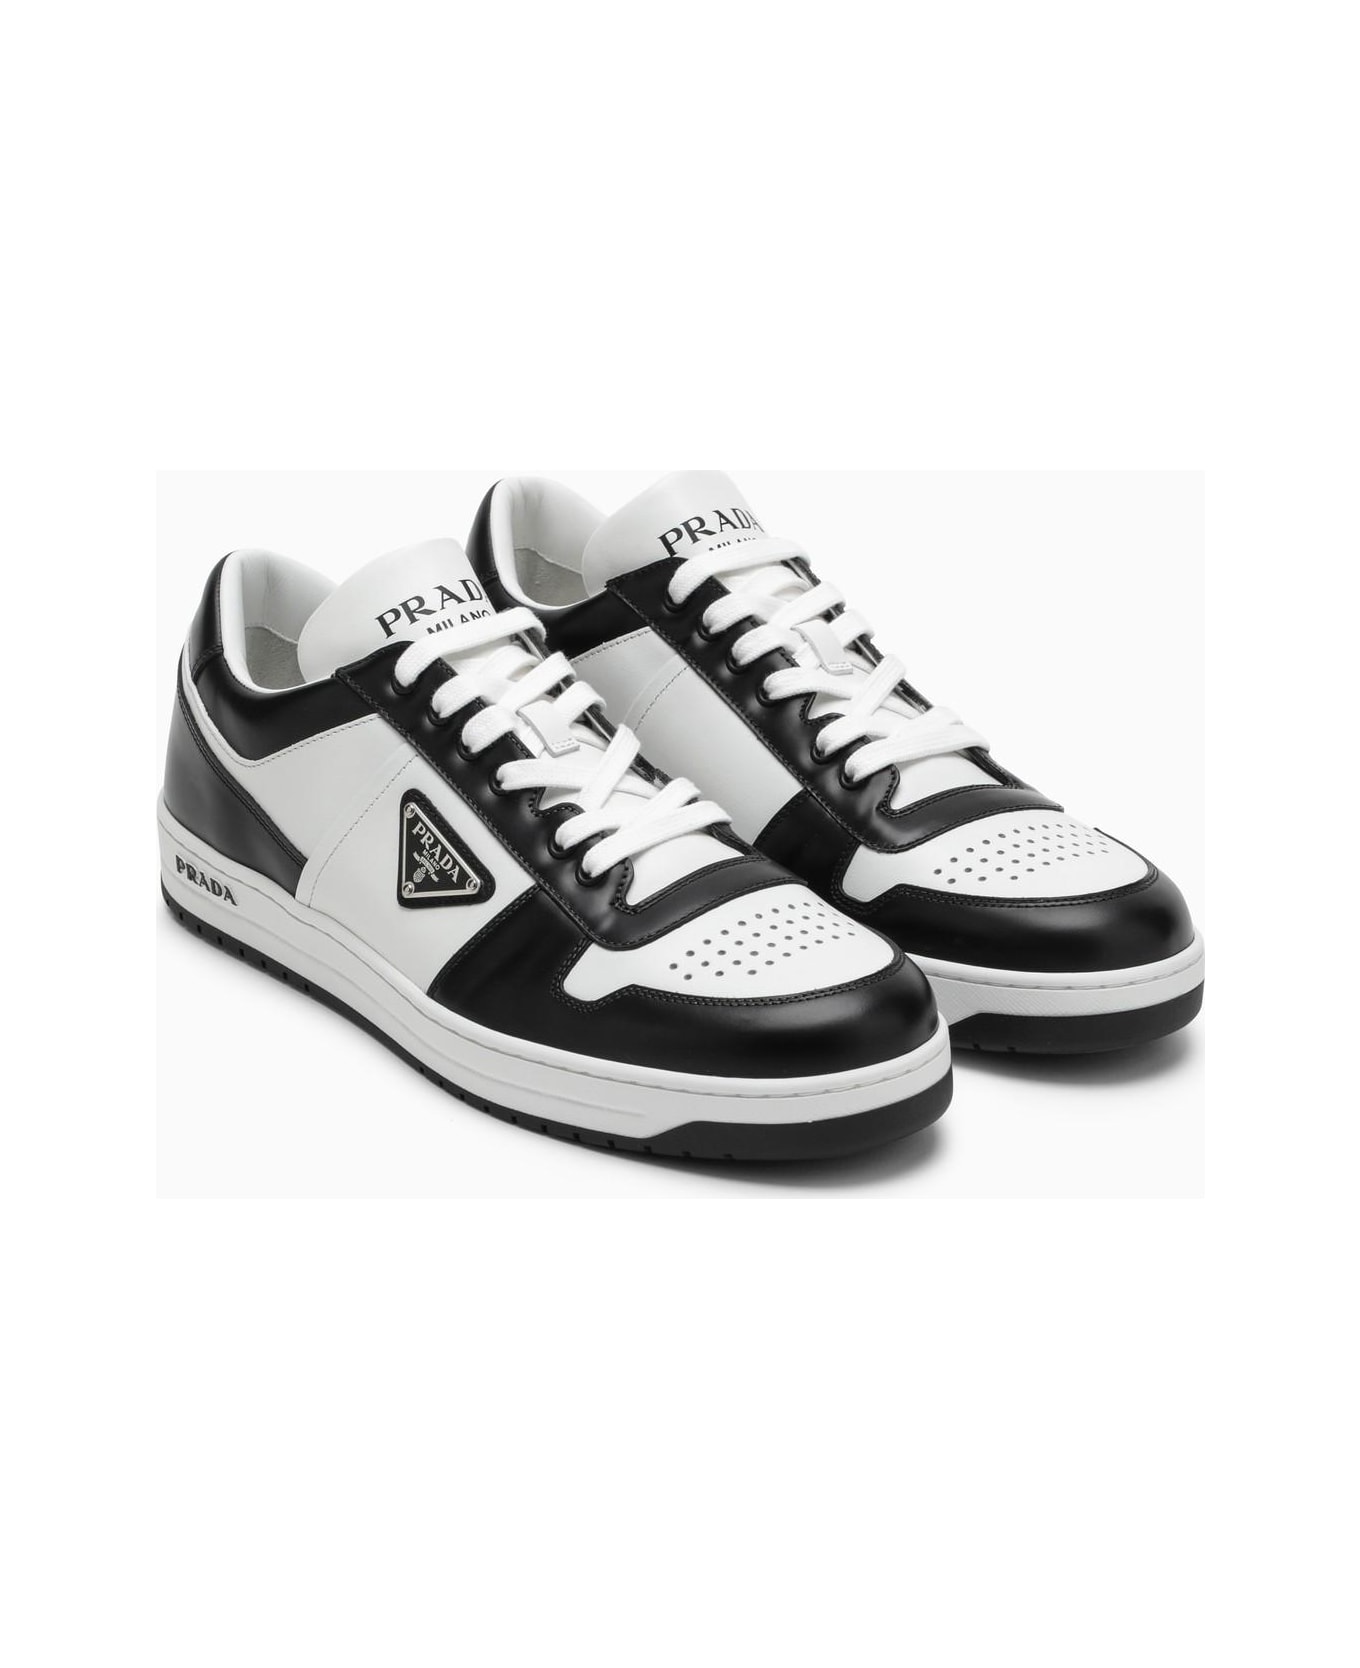 Prada White\/black Leather Holiday Low-top Sneakers - F Bianco E Nero